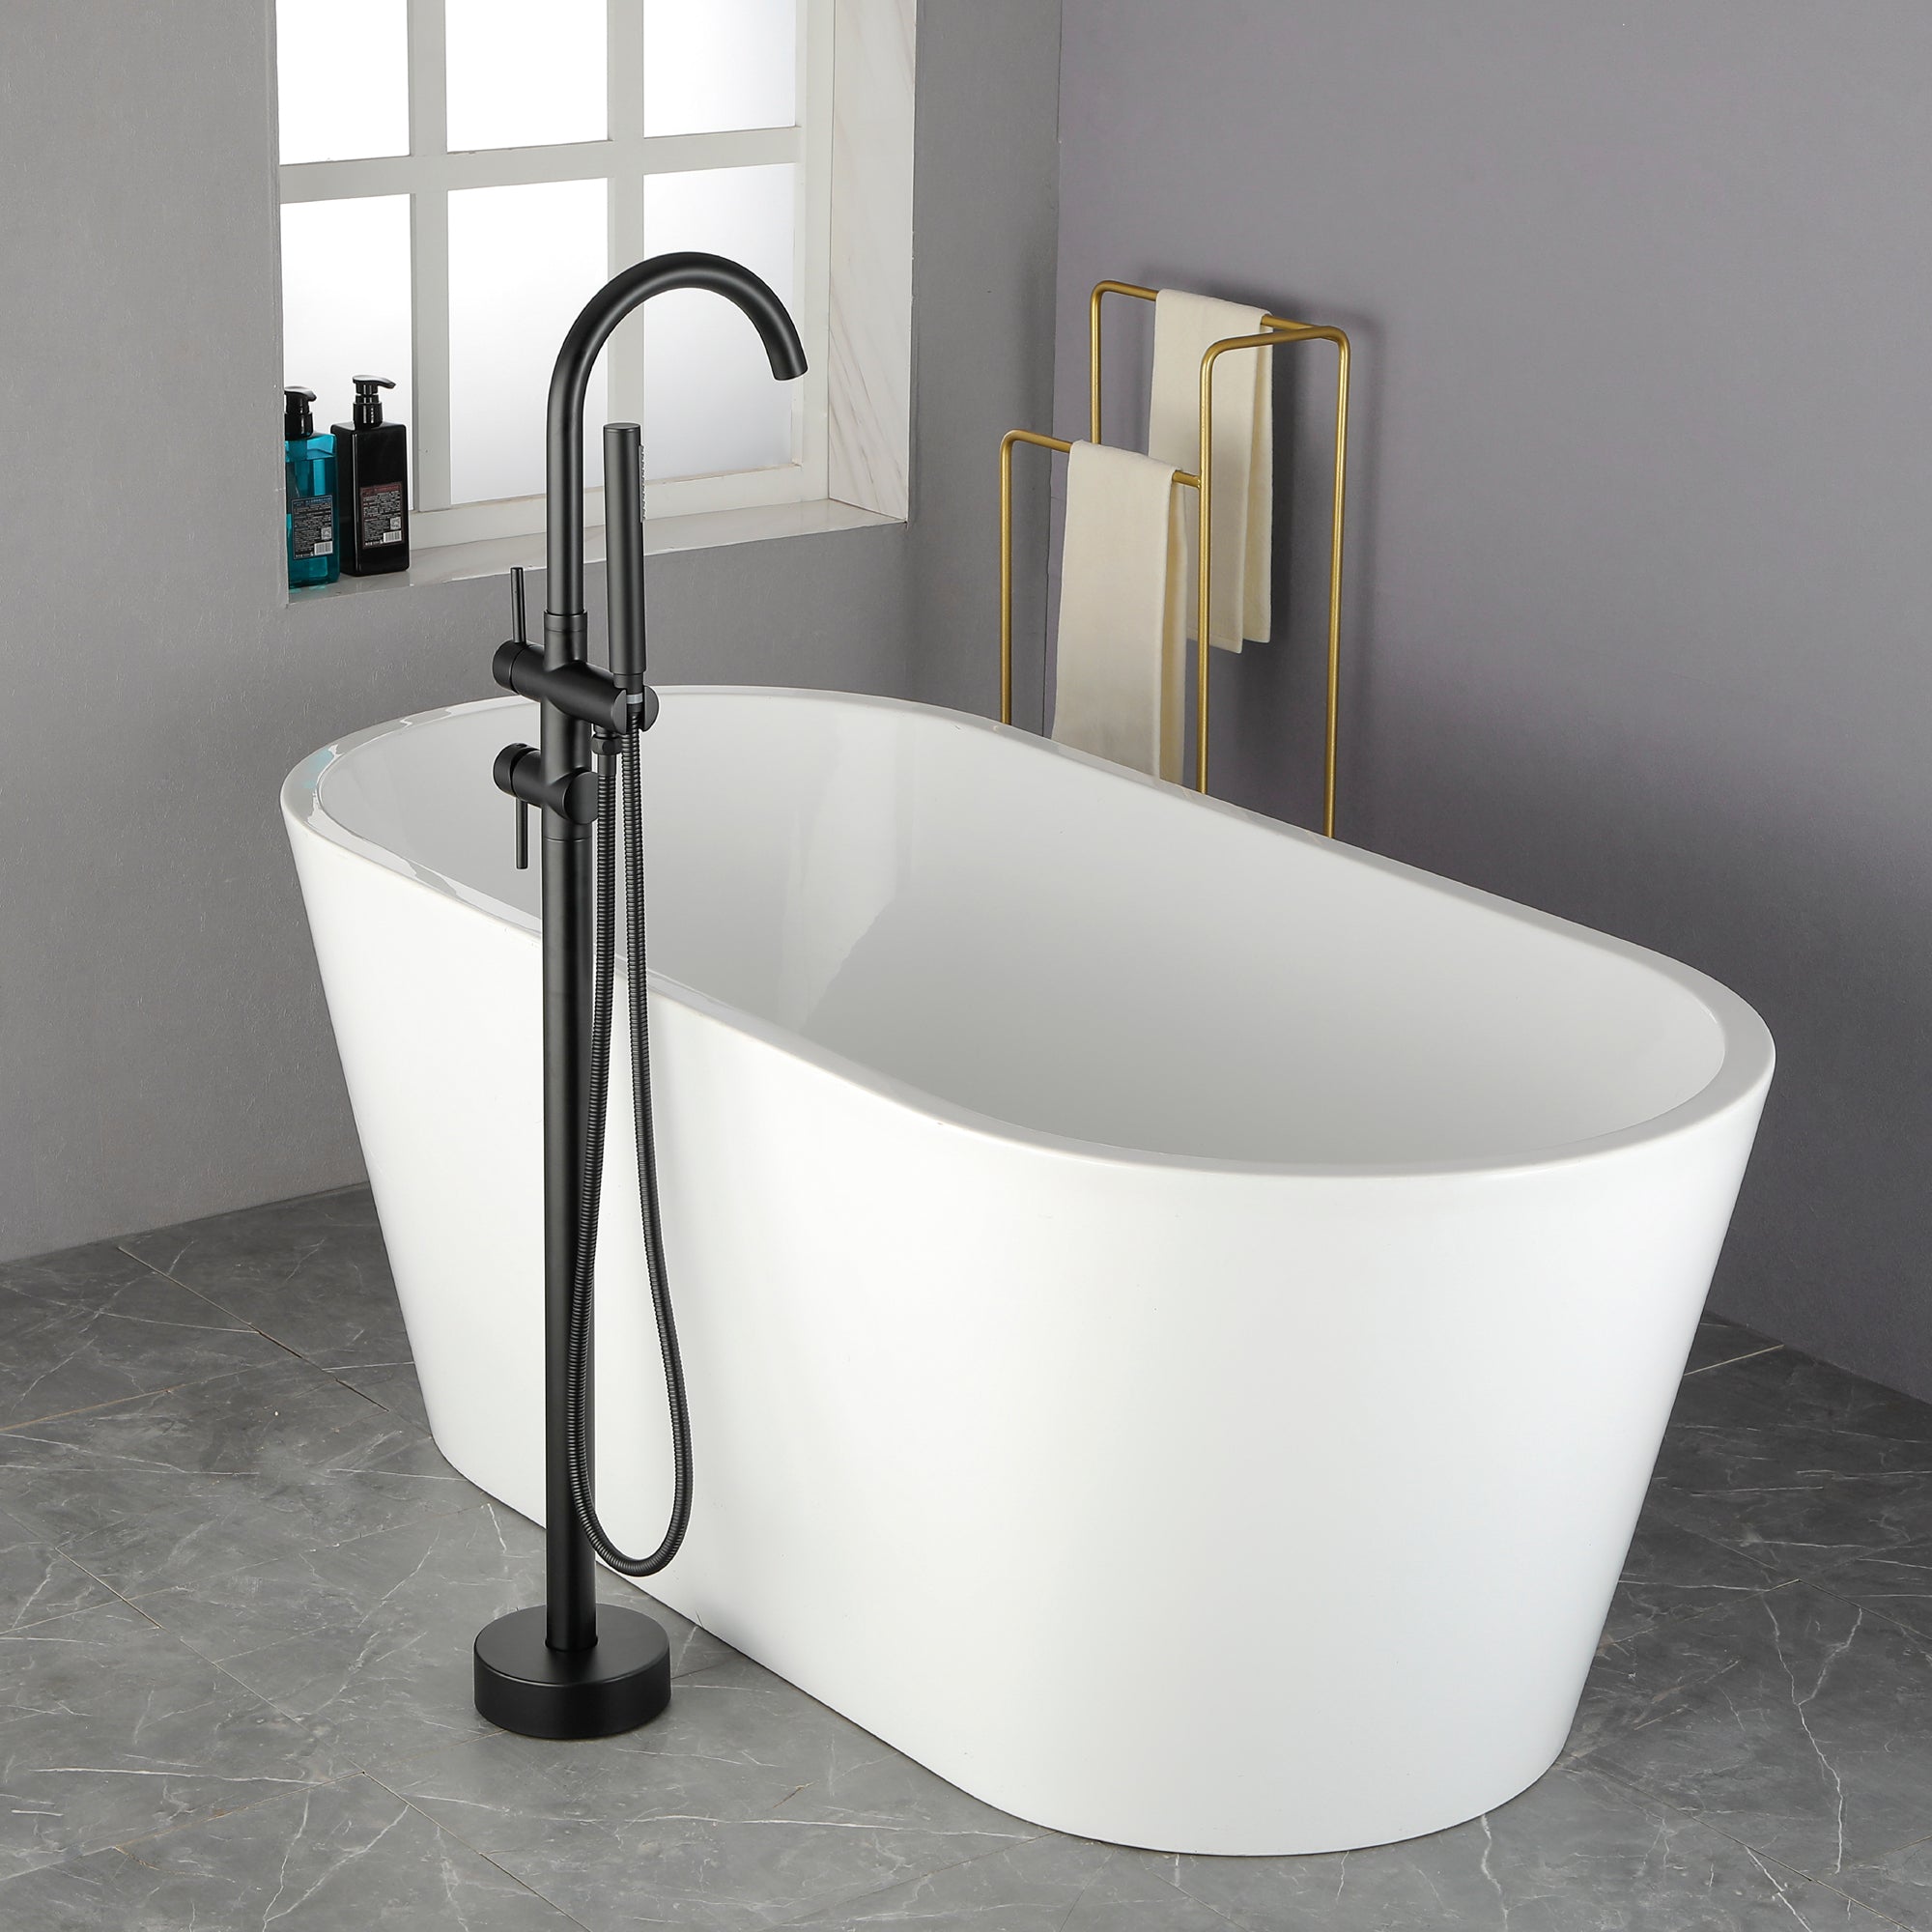 Boyel Living Freestanding Floor Mount 2-Handle Bath Tub Filler Faucet with Handheld Shower in Matte Black-Boyel Living